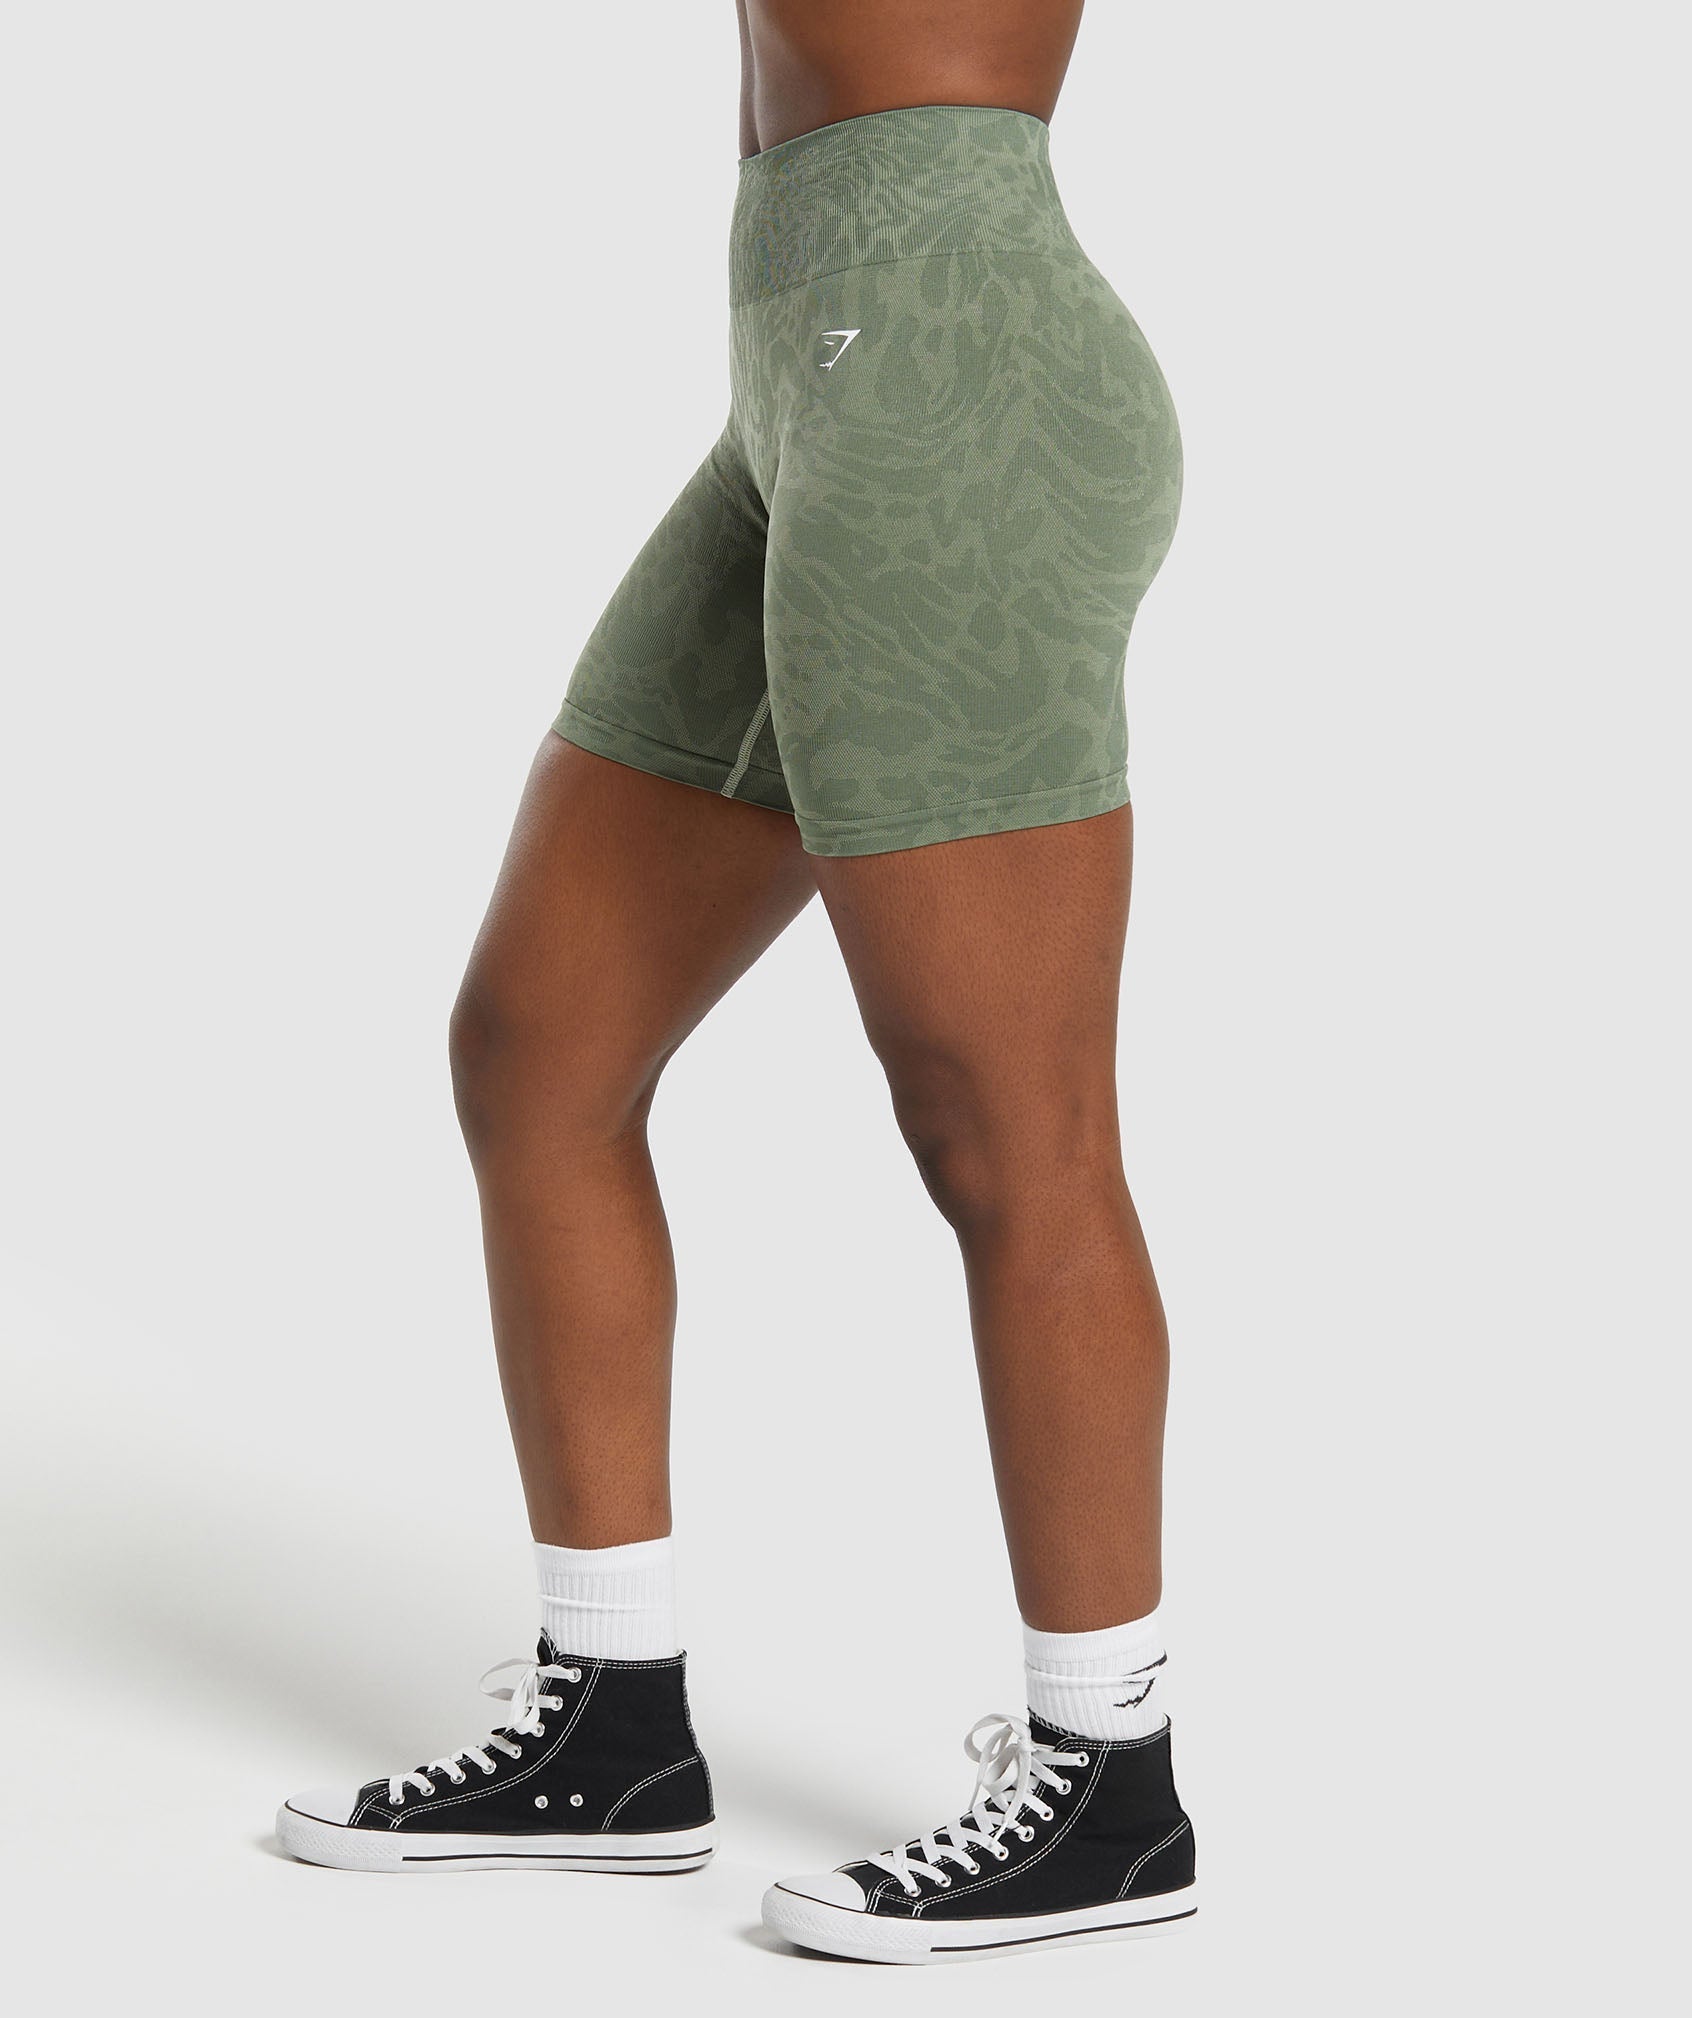 Adapt Safari Tight Shorts in Force Green/Faded Green - view 3